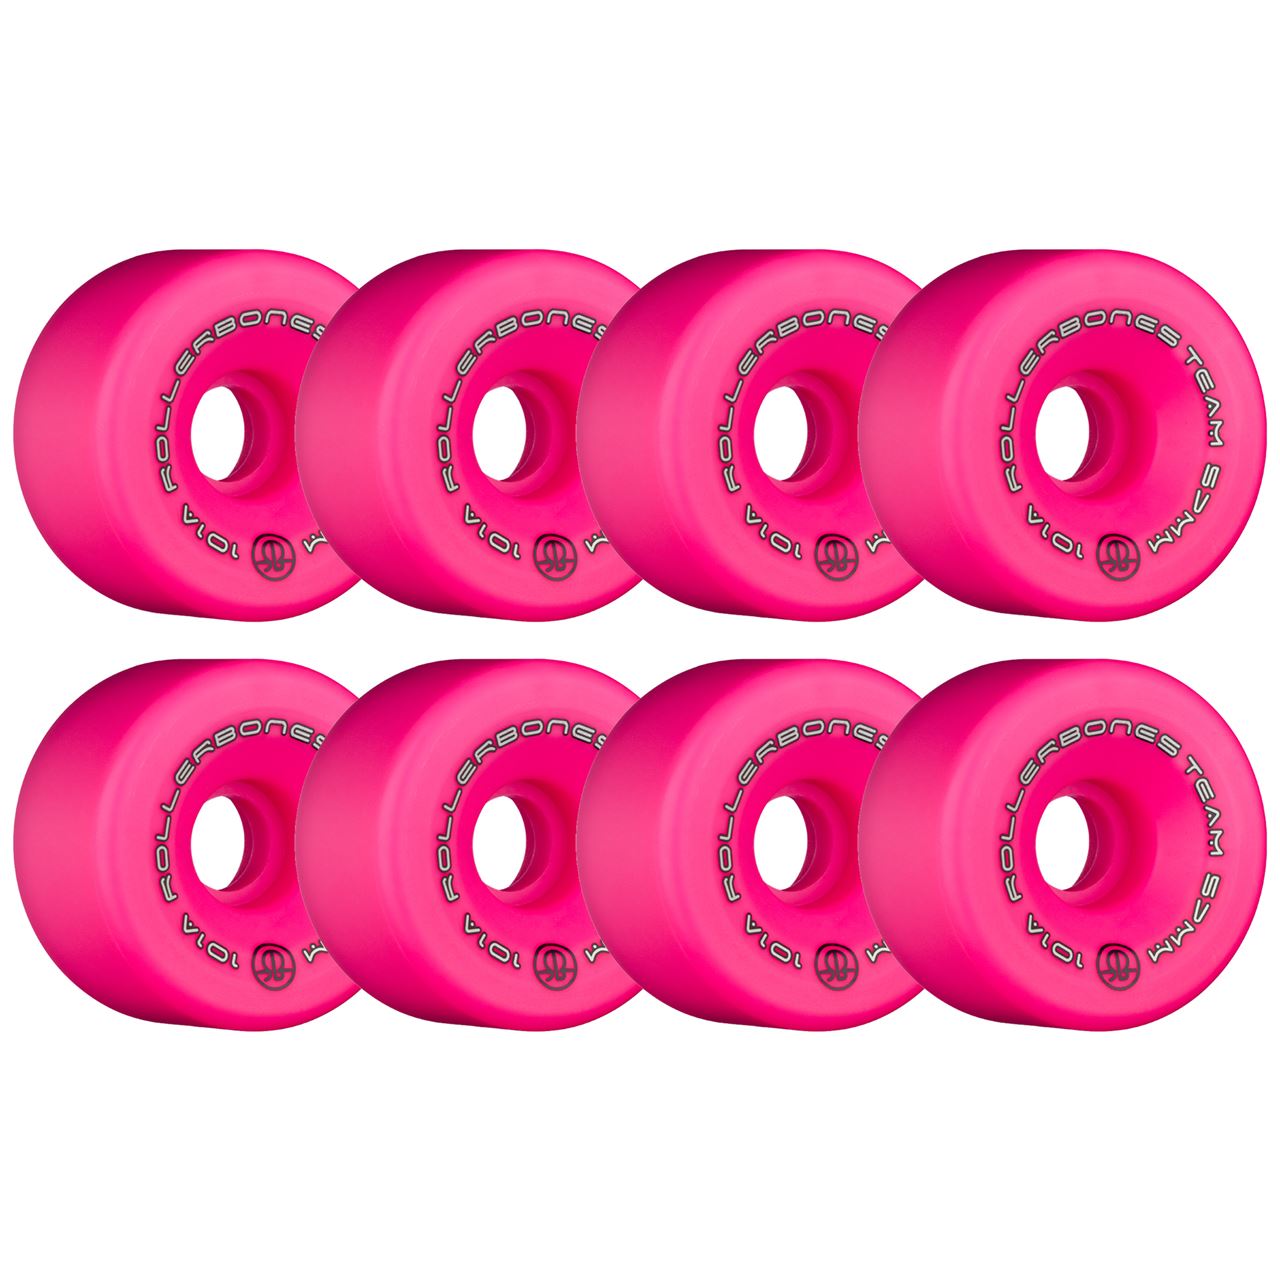 Rollerbones Team Logo Wheels Pink 57mm 101a - Set of 8